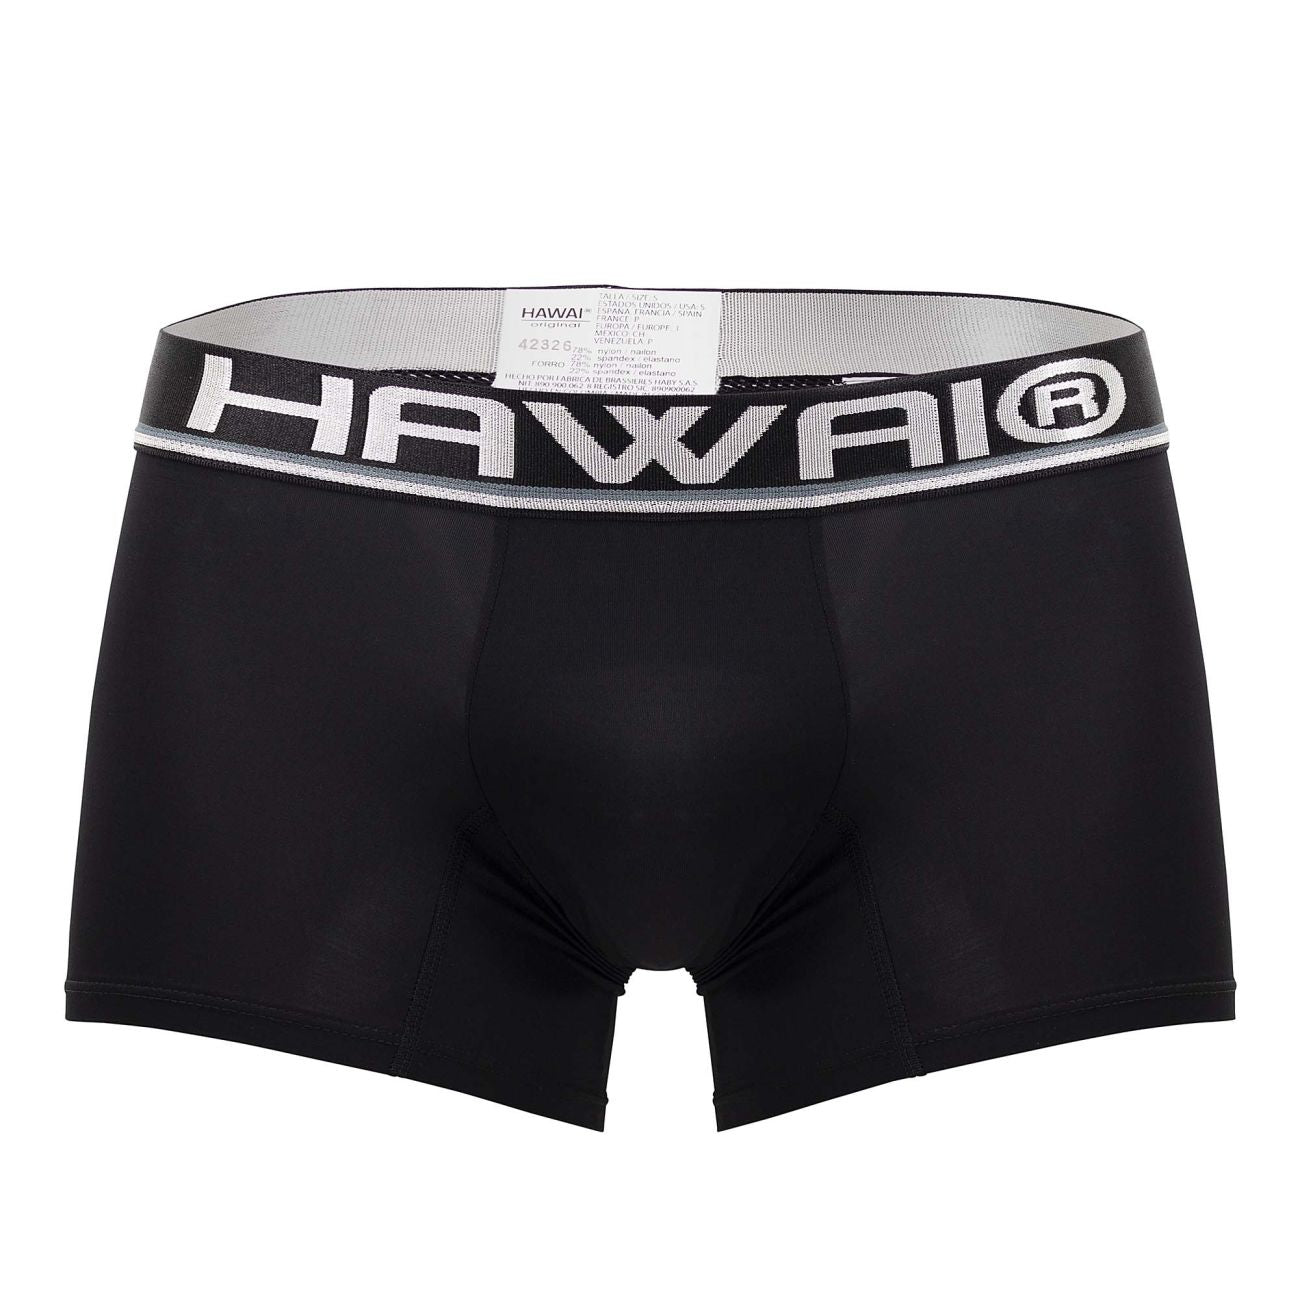 HAWAI 42326 Microfiber Boxer Briefs Black